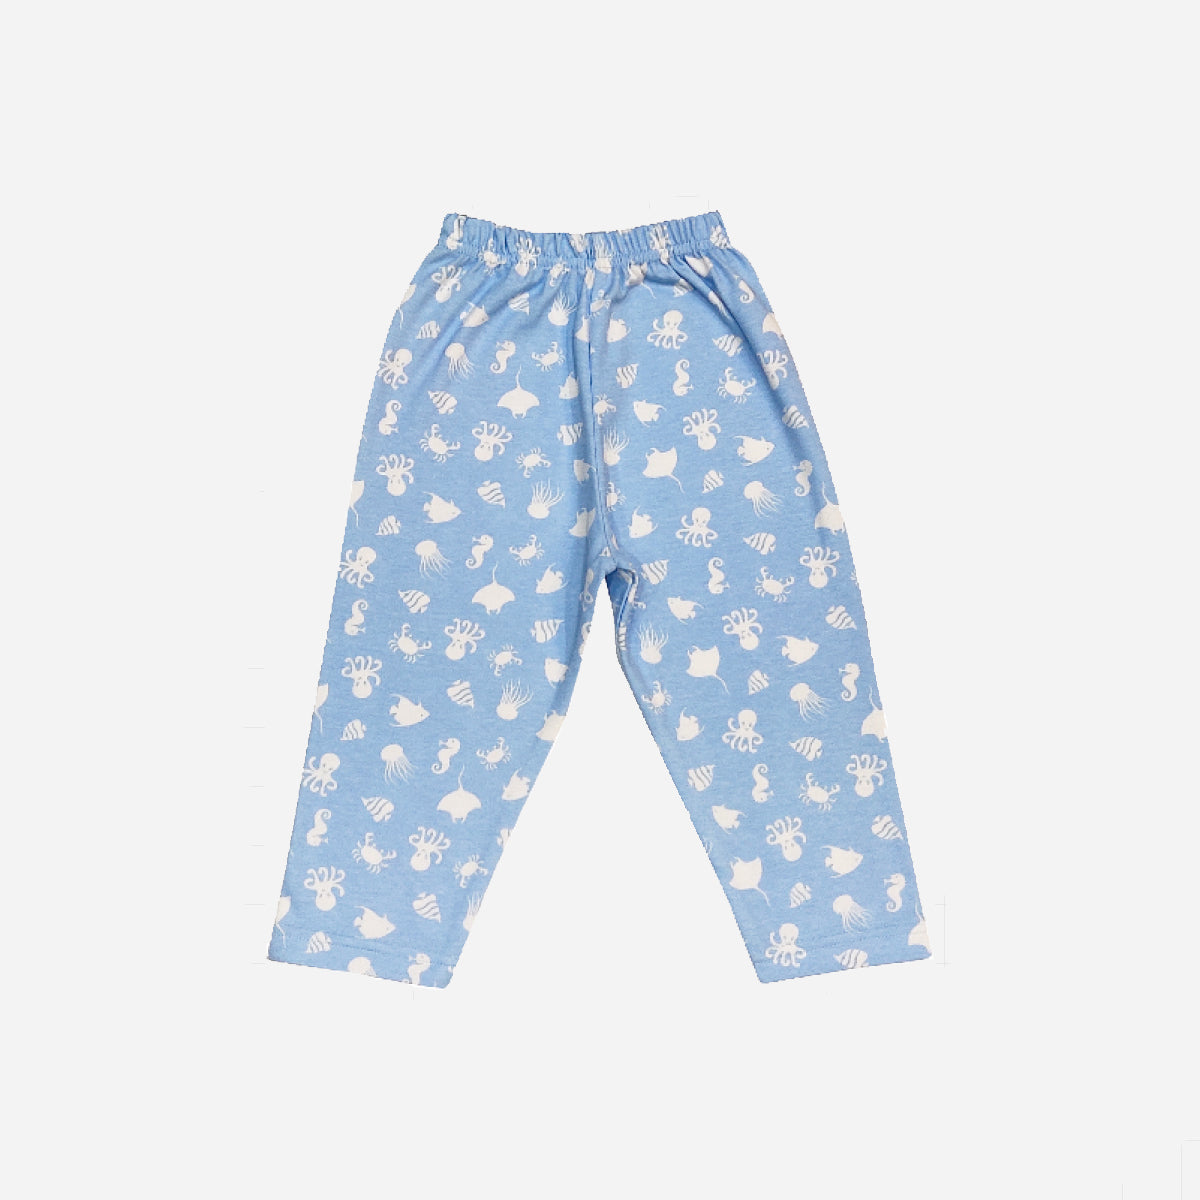 Full Sleeves Baby Octopus Printed Pajamas / Night Suit  for Baby/Kids - Sky Blue